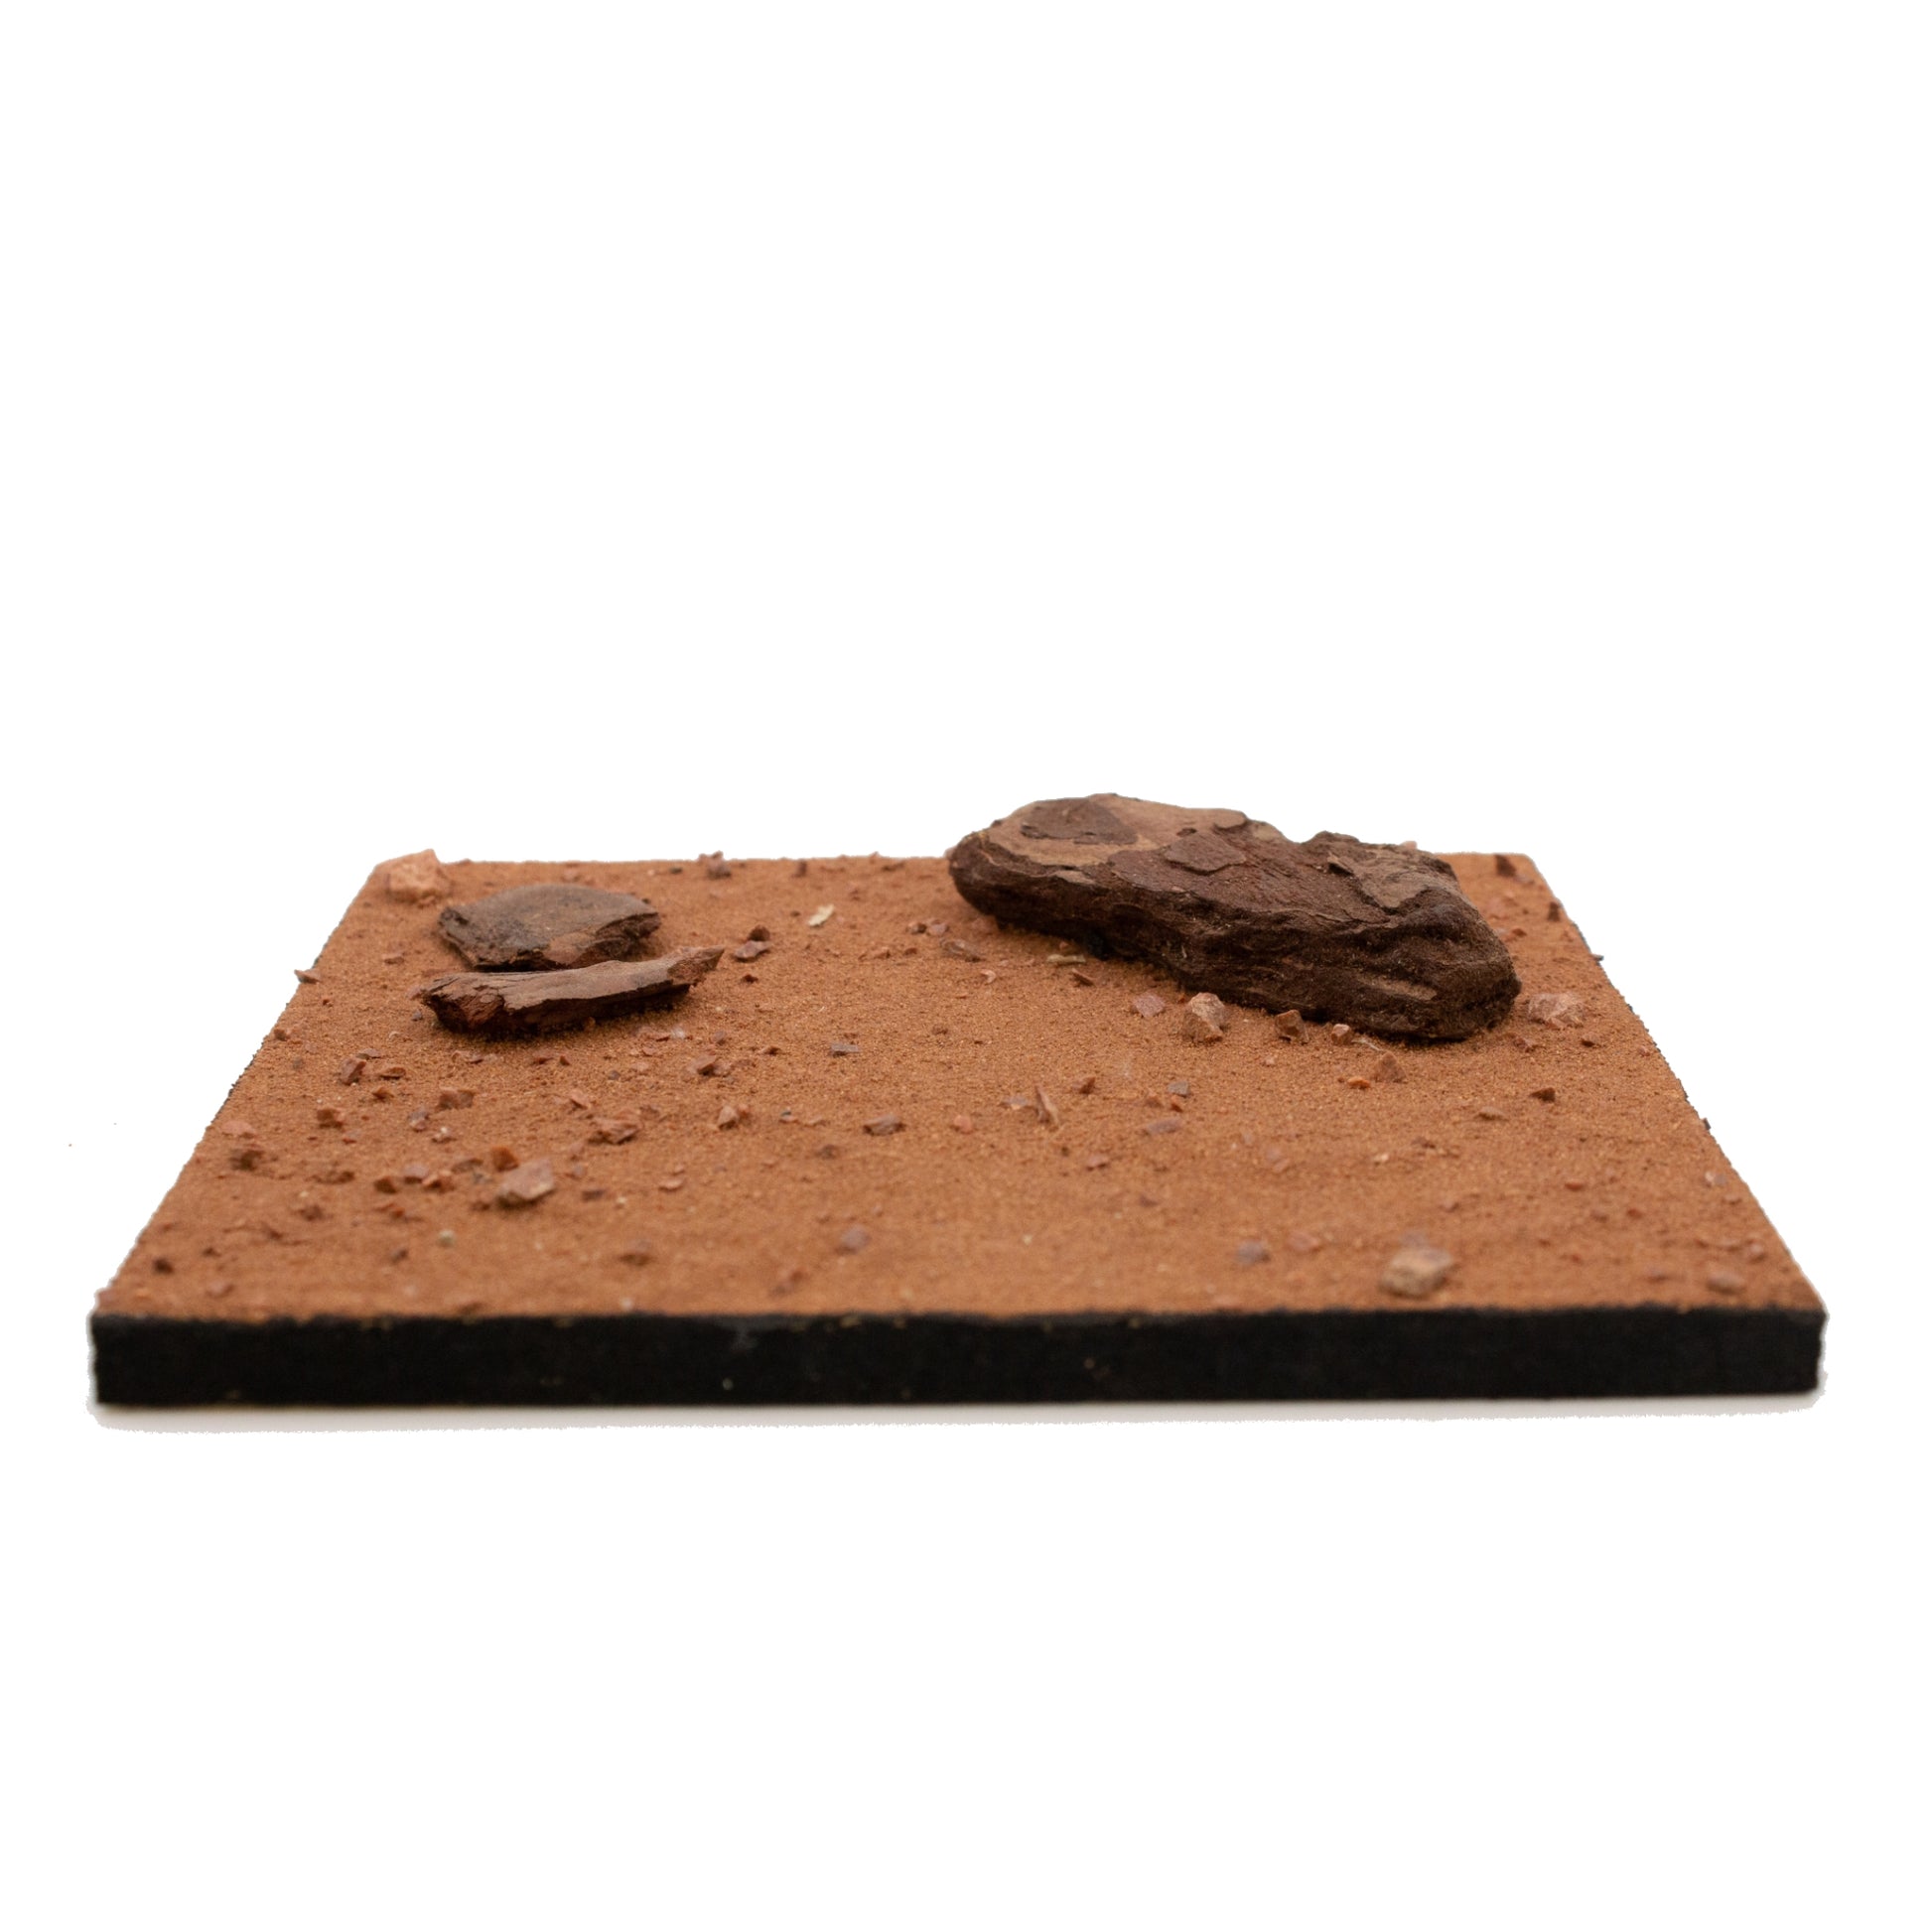 Miniature Bases and Basing Materials - WWGaming